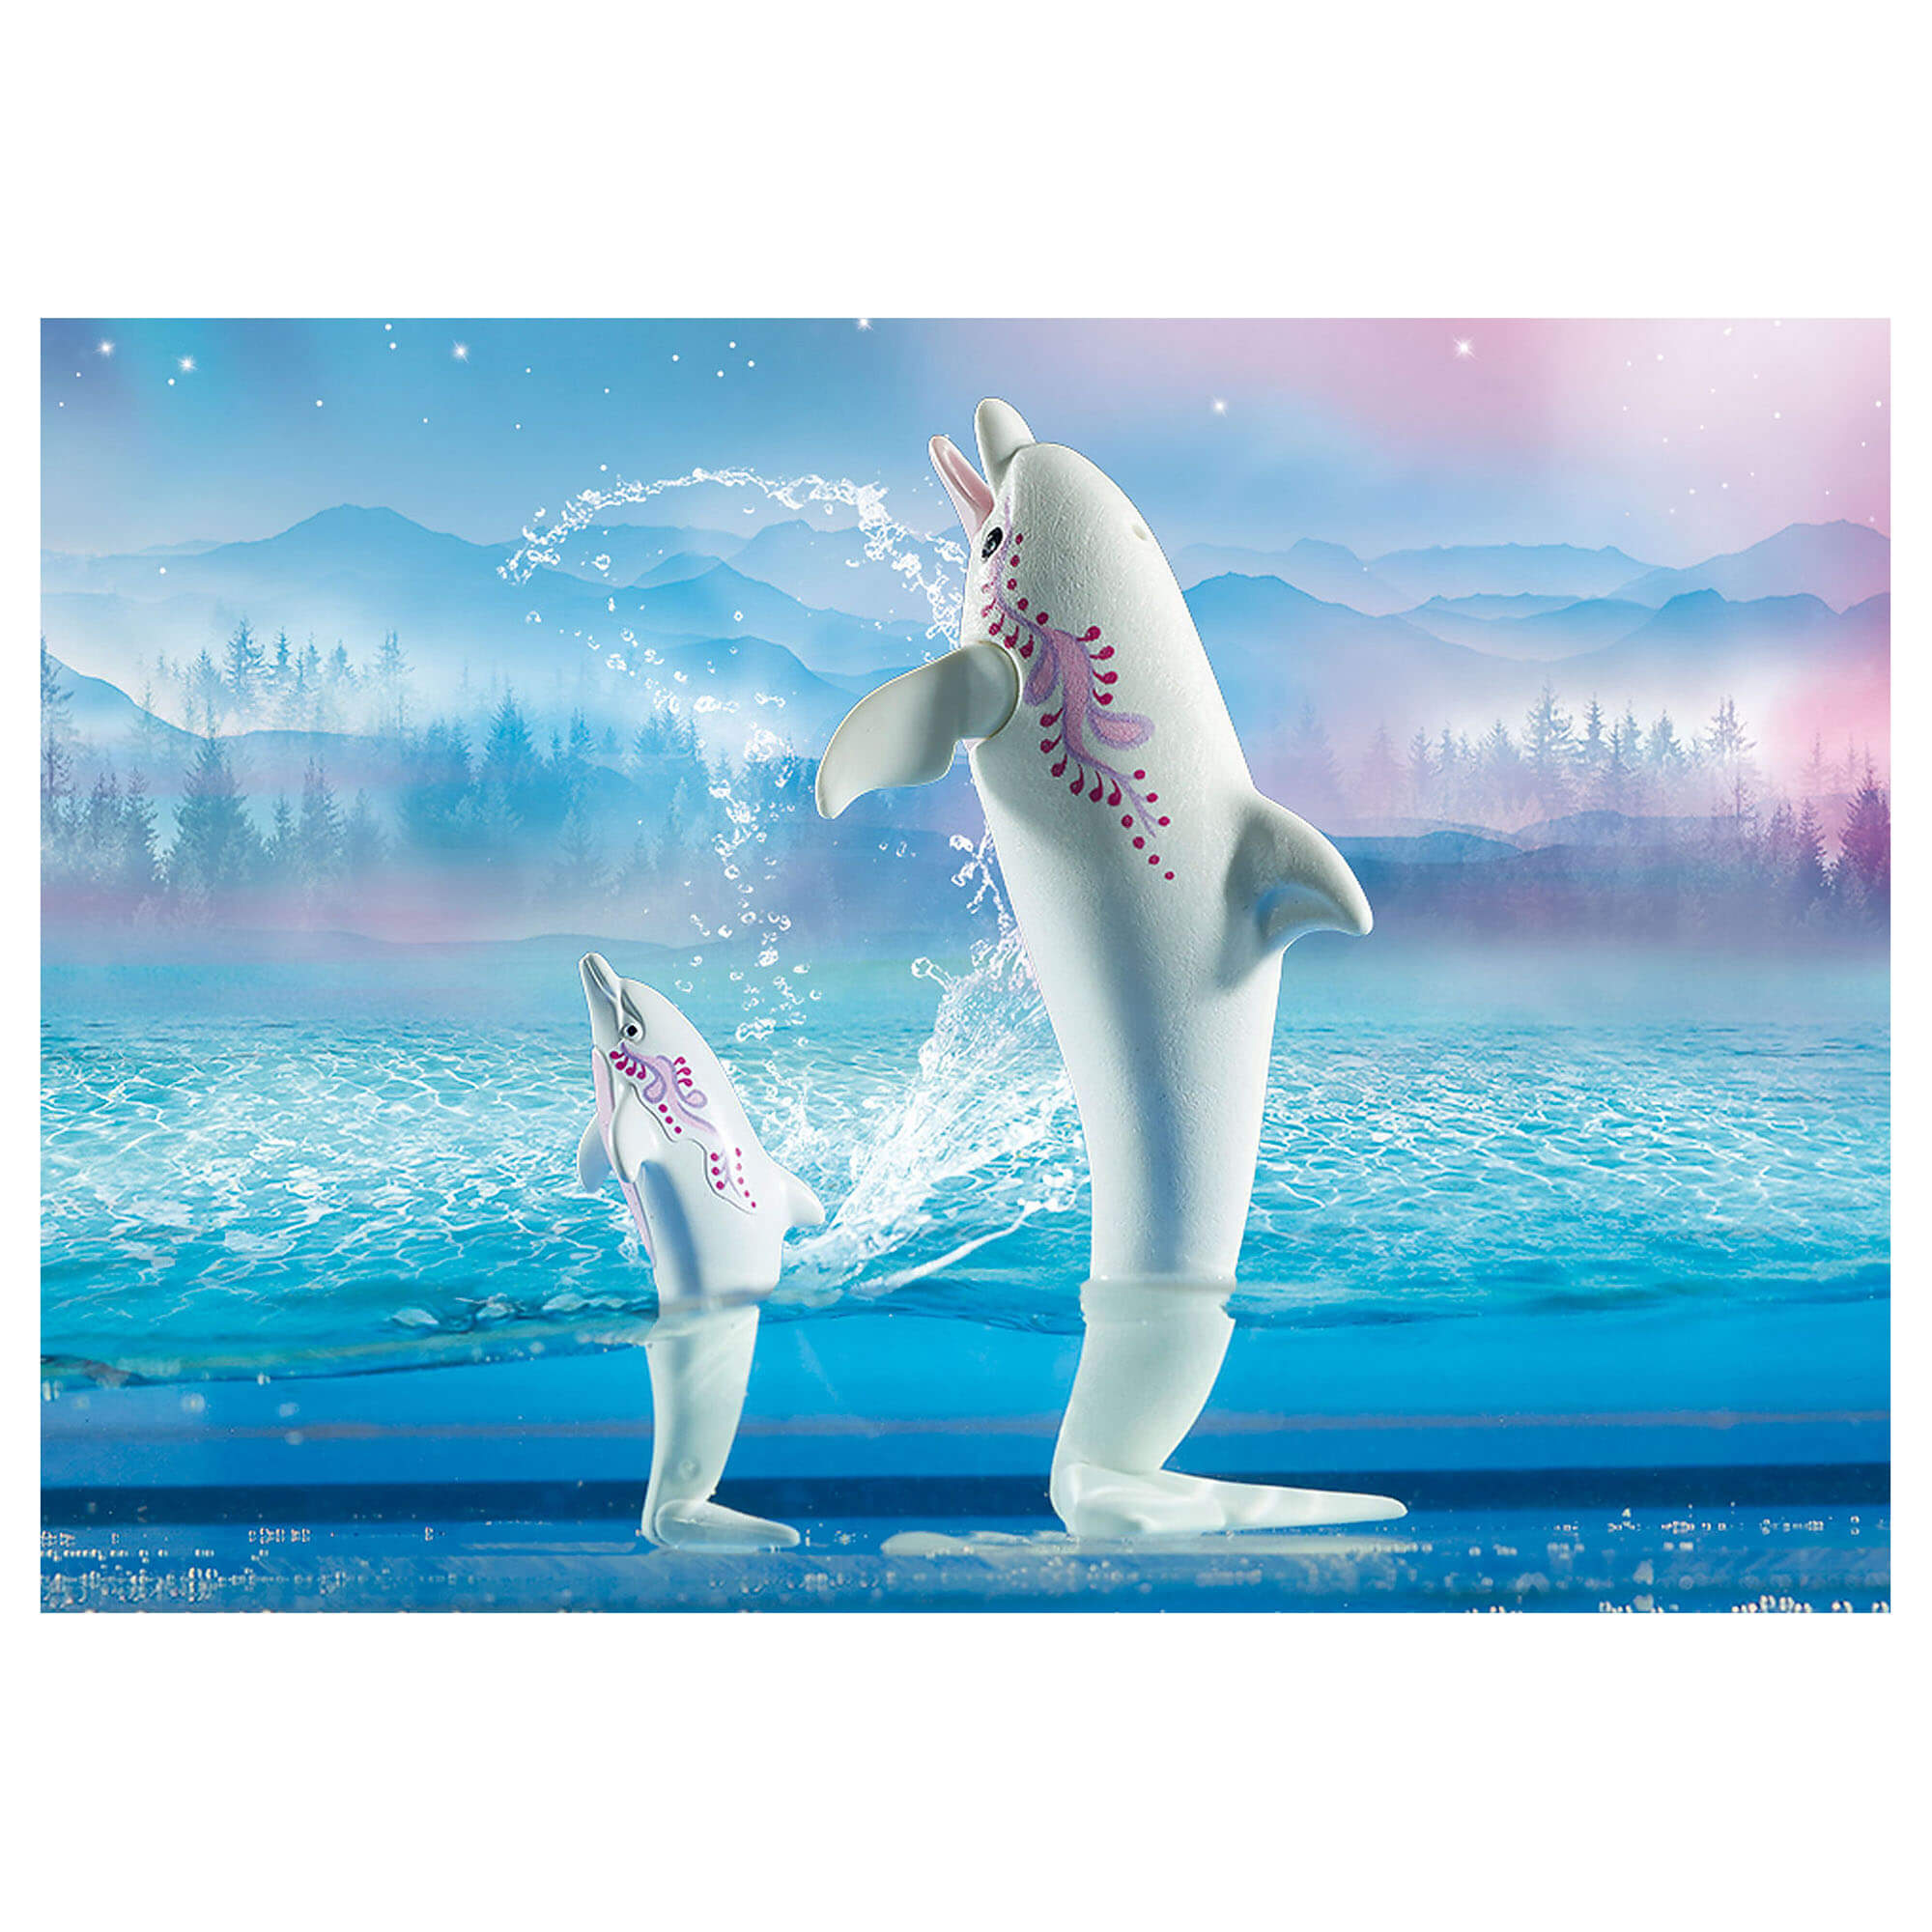 PLAYMOBIL Limited Edition Fairies Romantic Fairy Boat (70000)